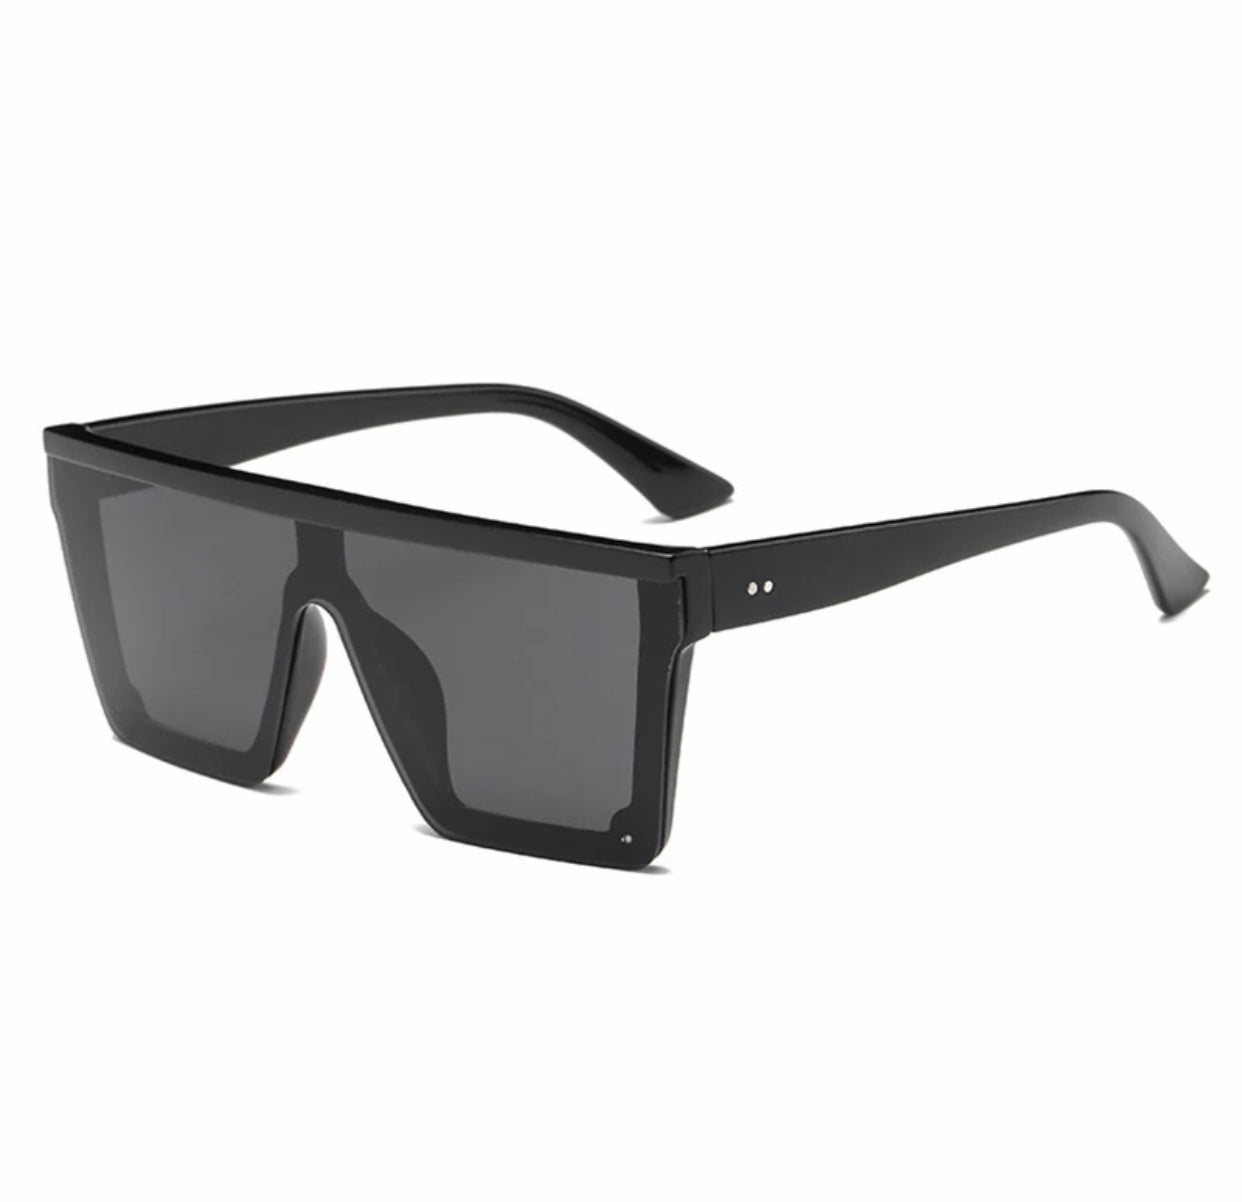 OMW Round Sunglasses, Black & Grey